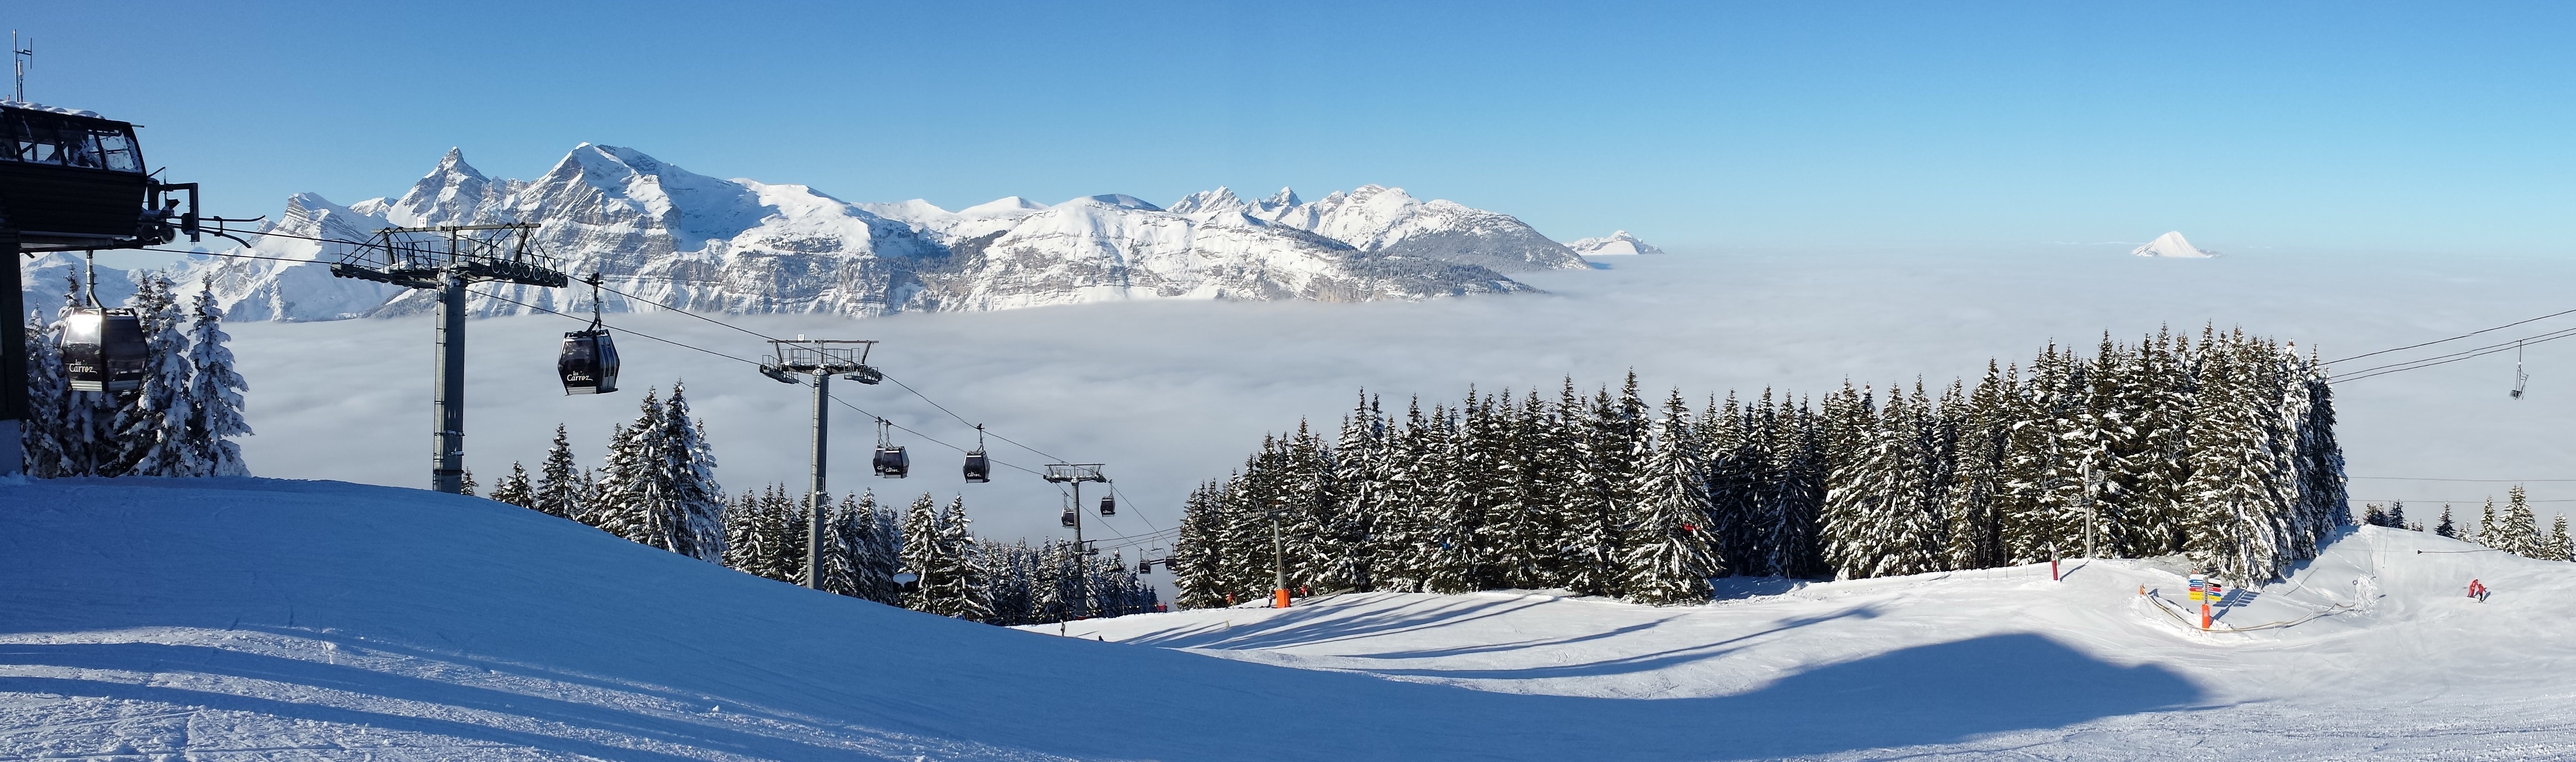 Ski resort of Les Carroz French alps